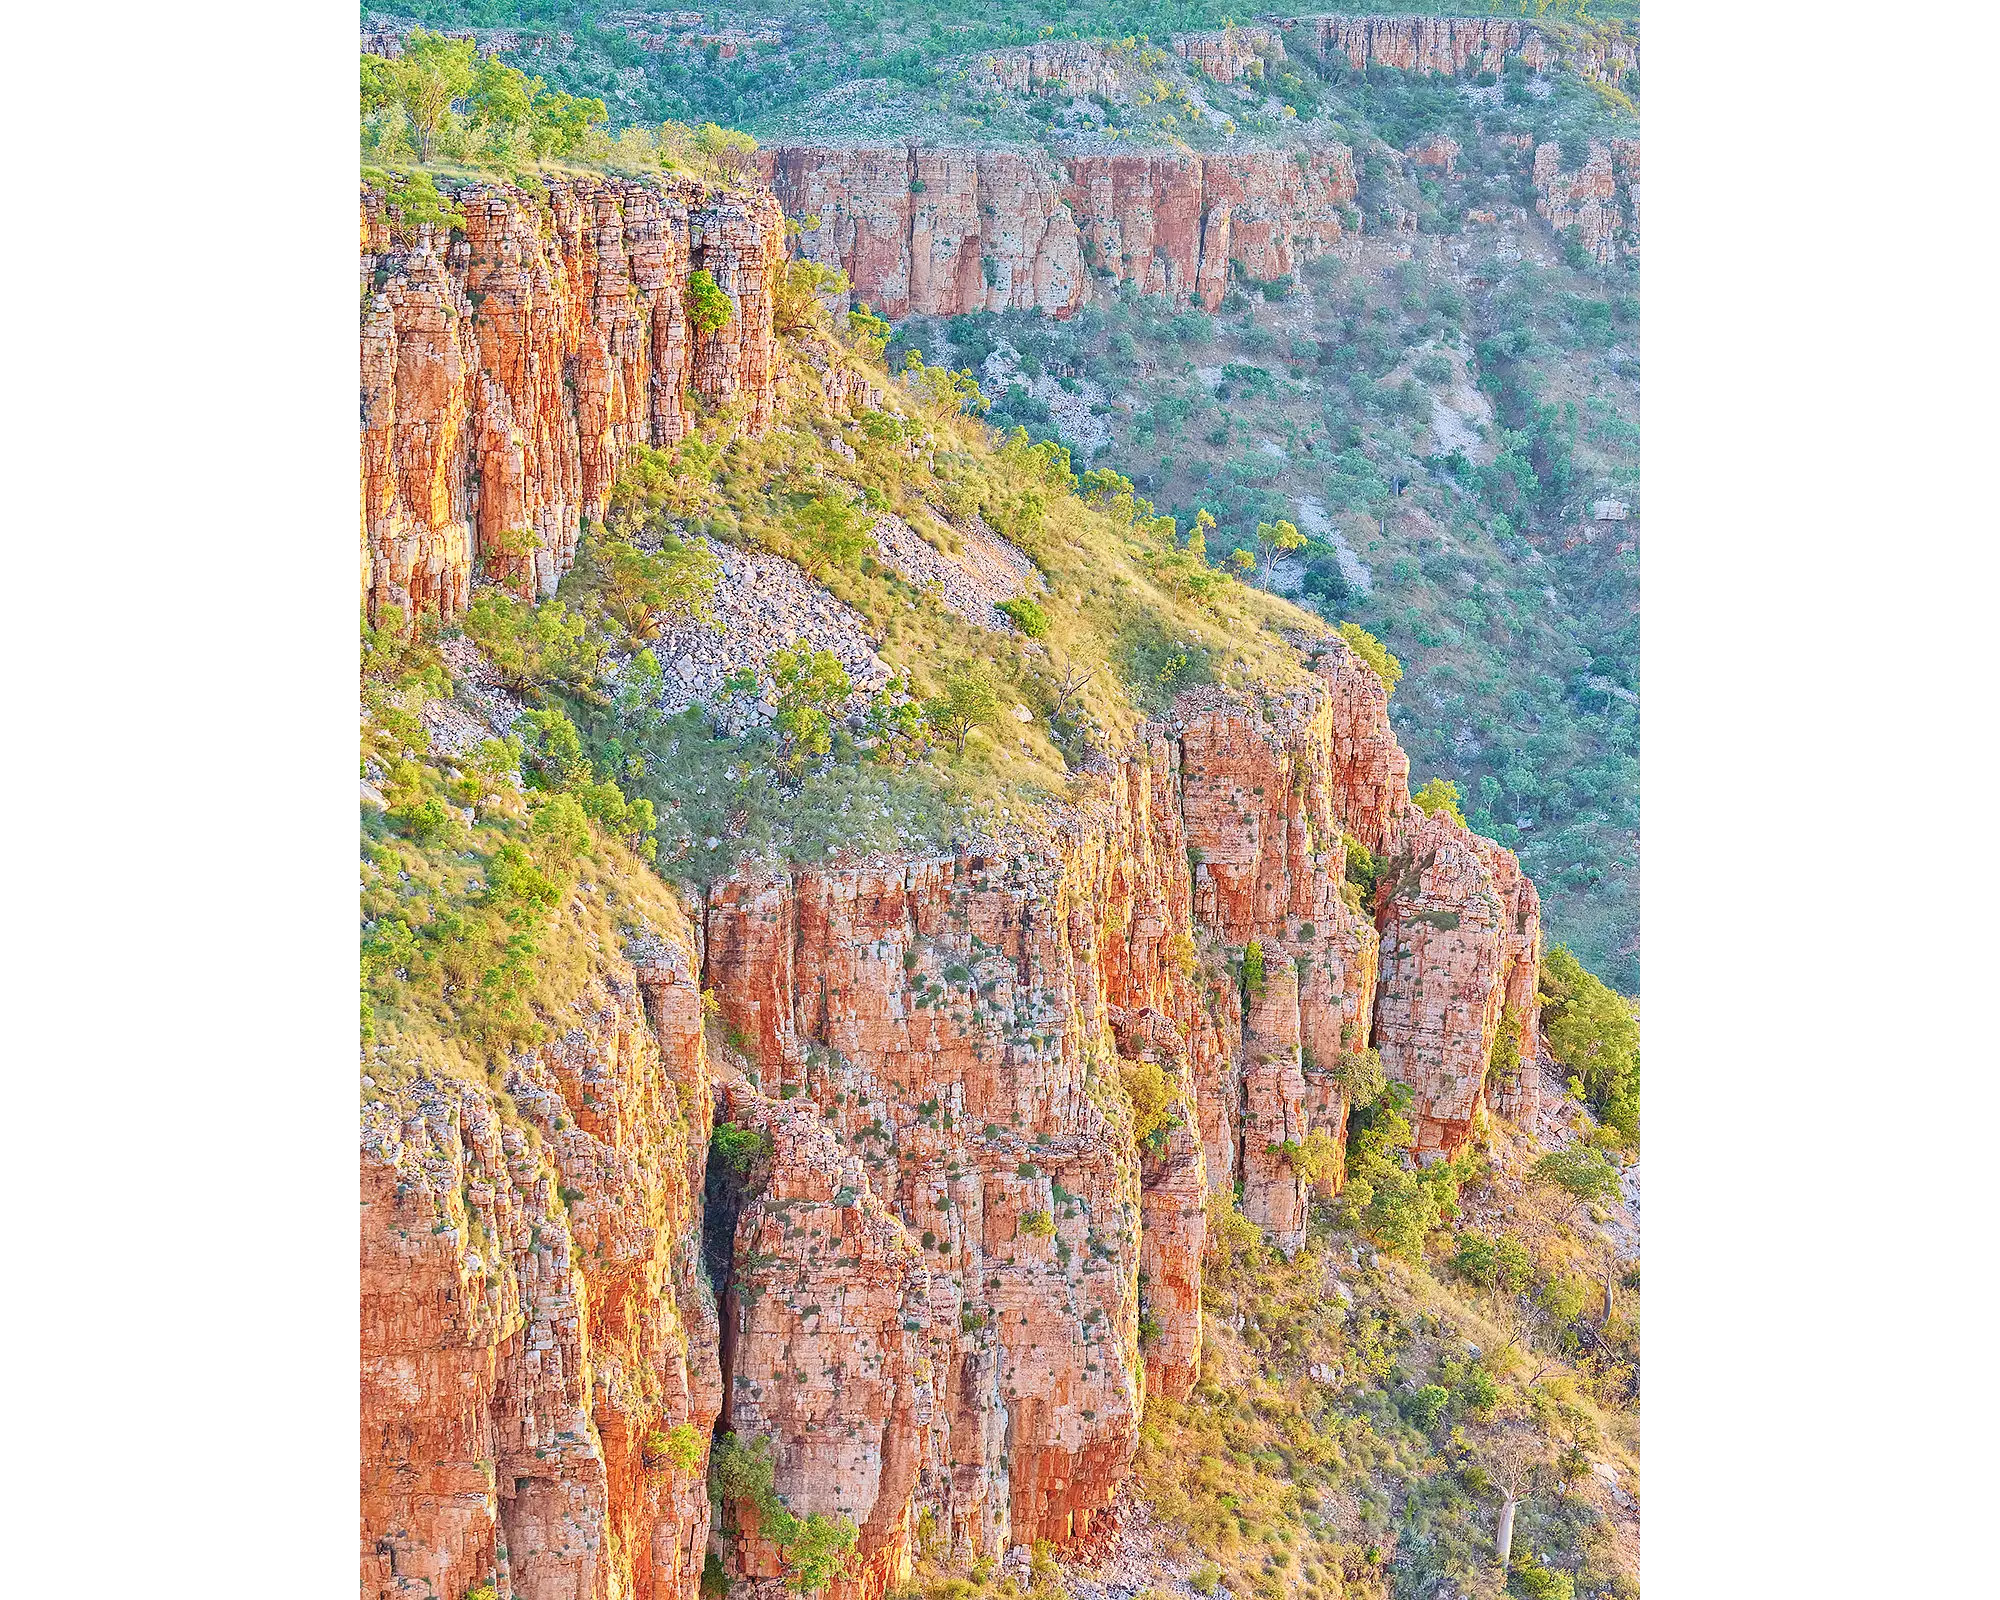 Cliff face of Cockburn Range, The Kimberley, Western Australia.